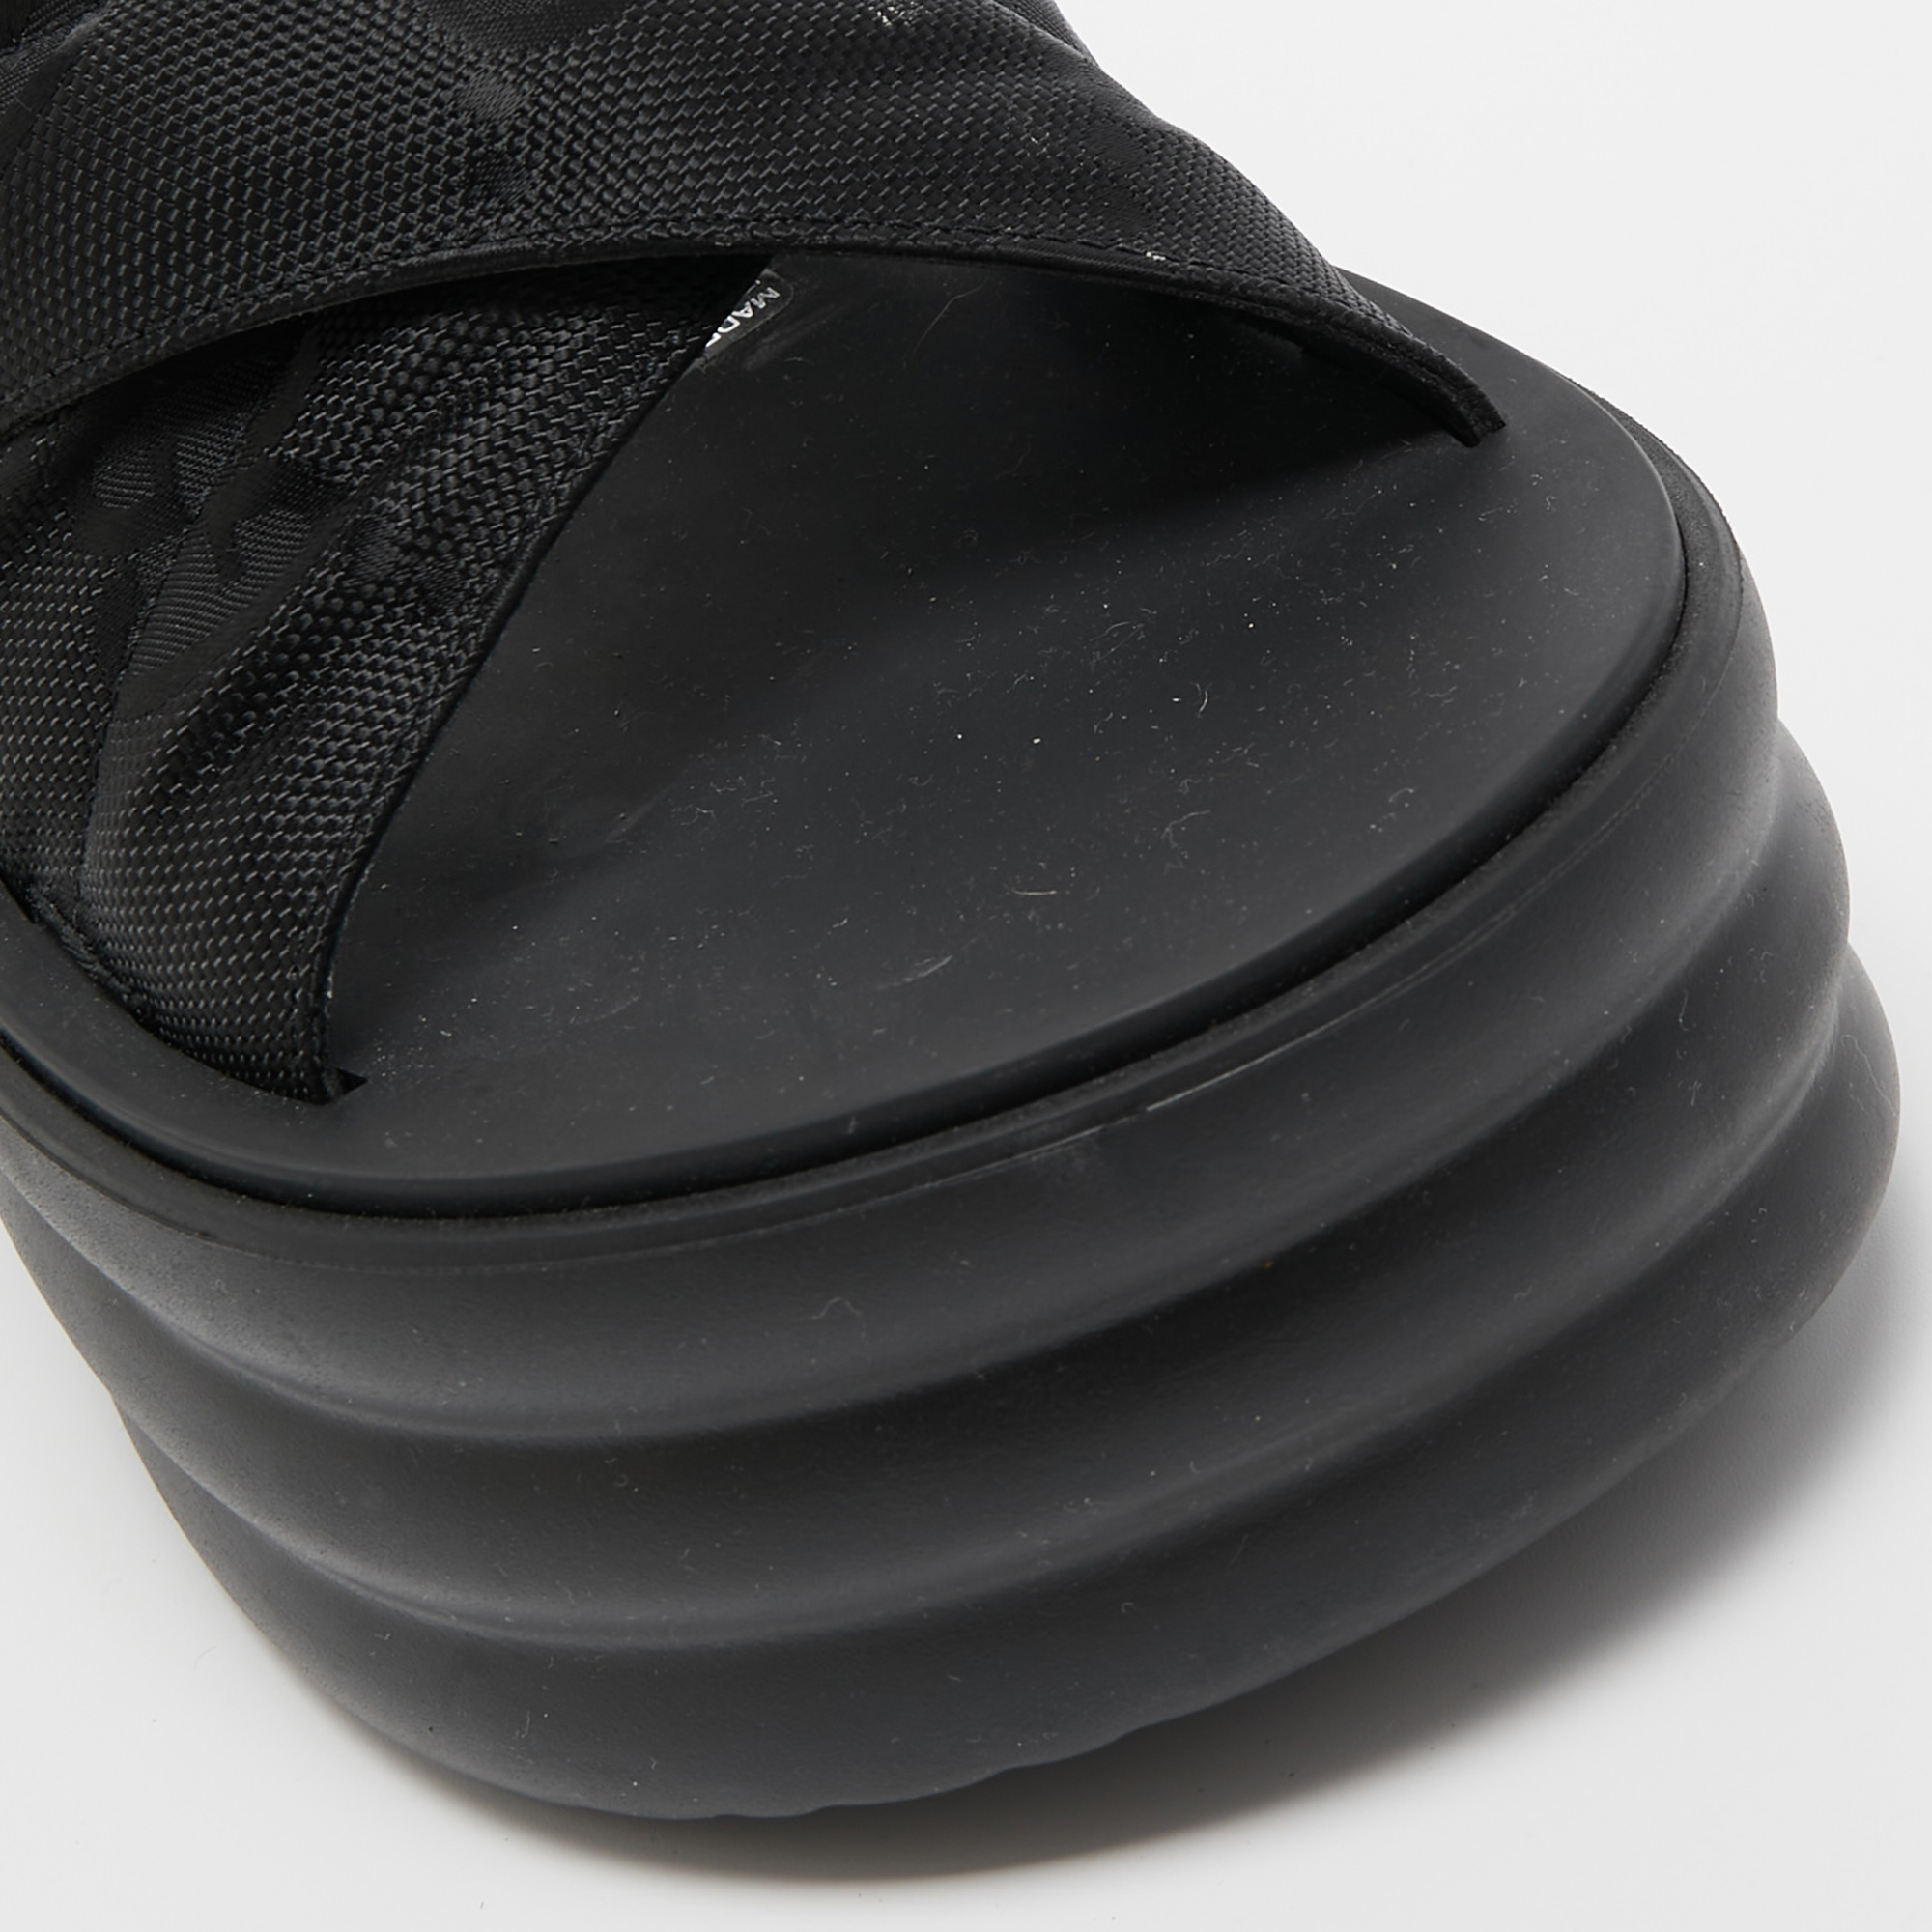 Gucci Black GG Canvas Platform Sandals Size 36